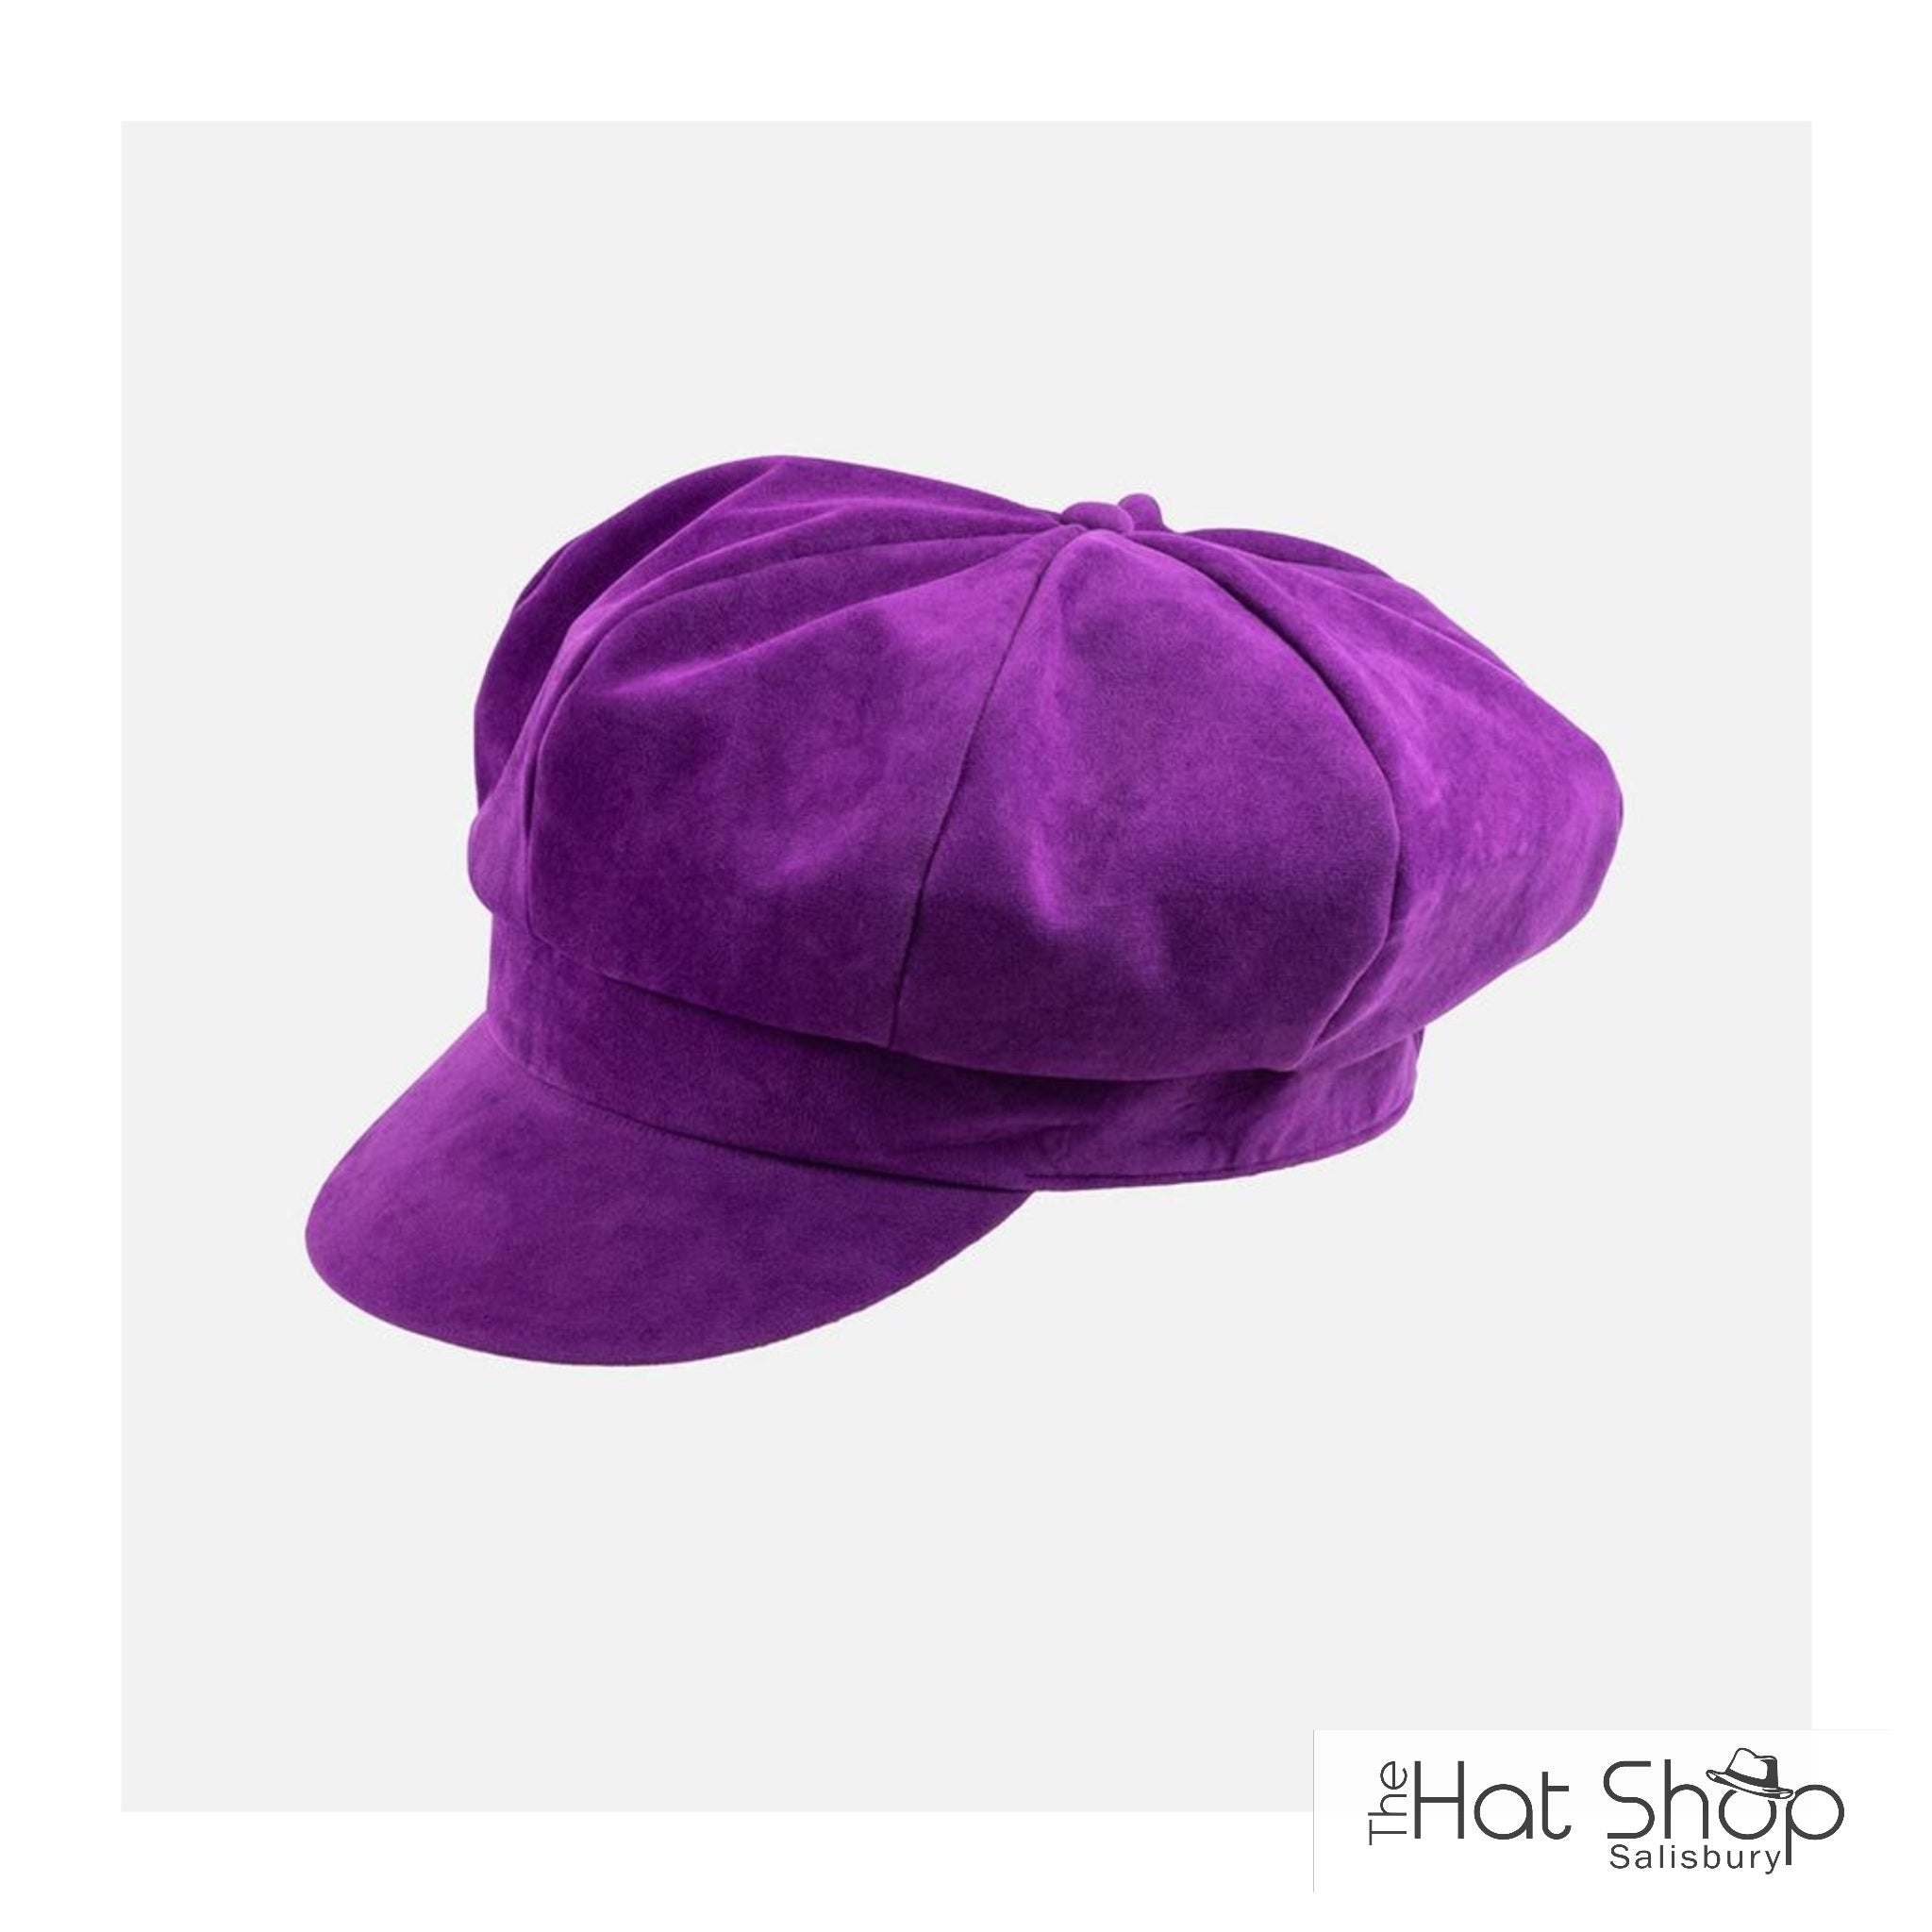 The Hat Shop Ladies Proppa Toppa Chelsea Hat Magenta